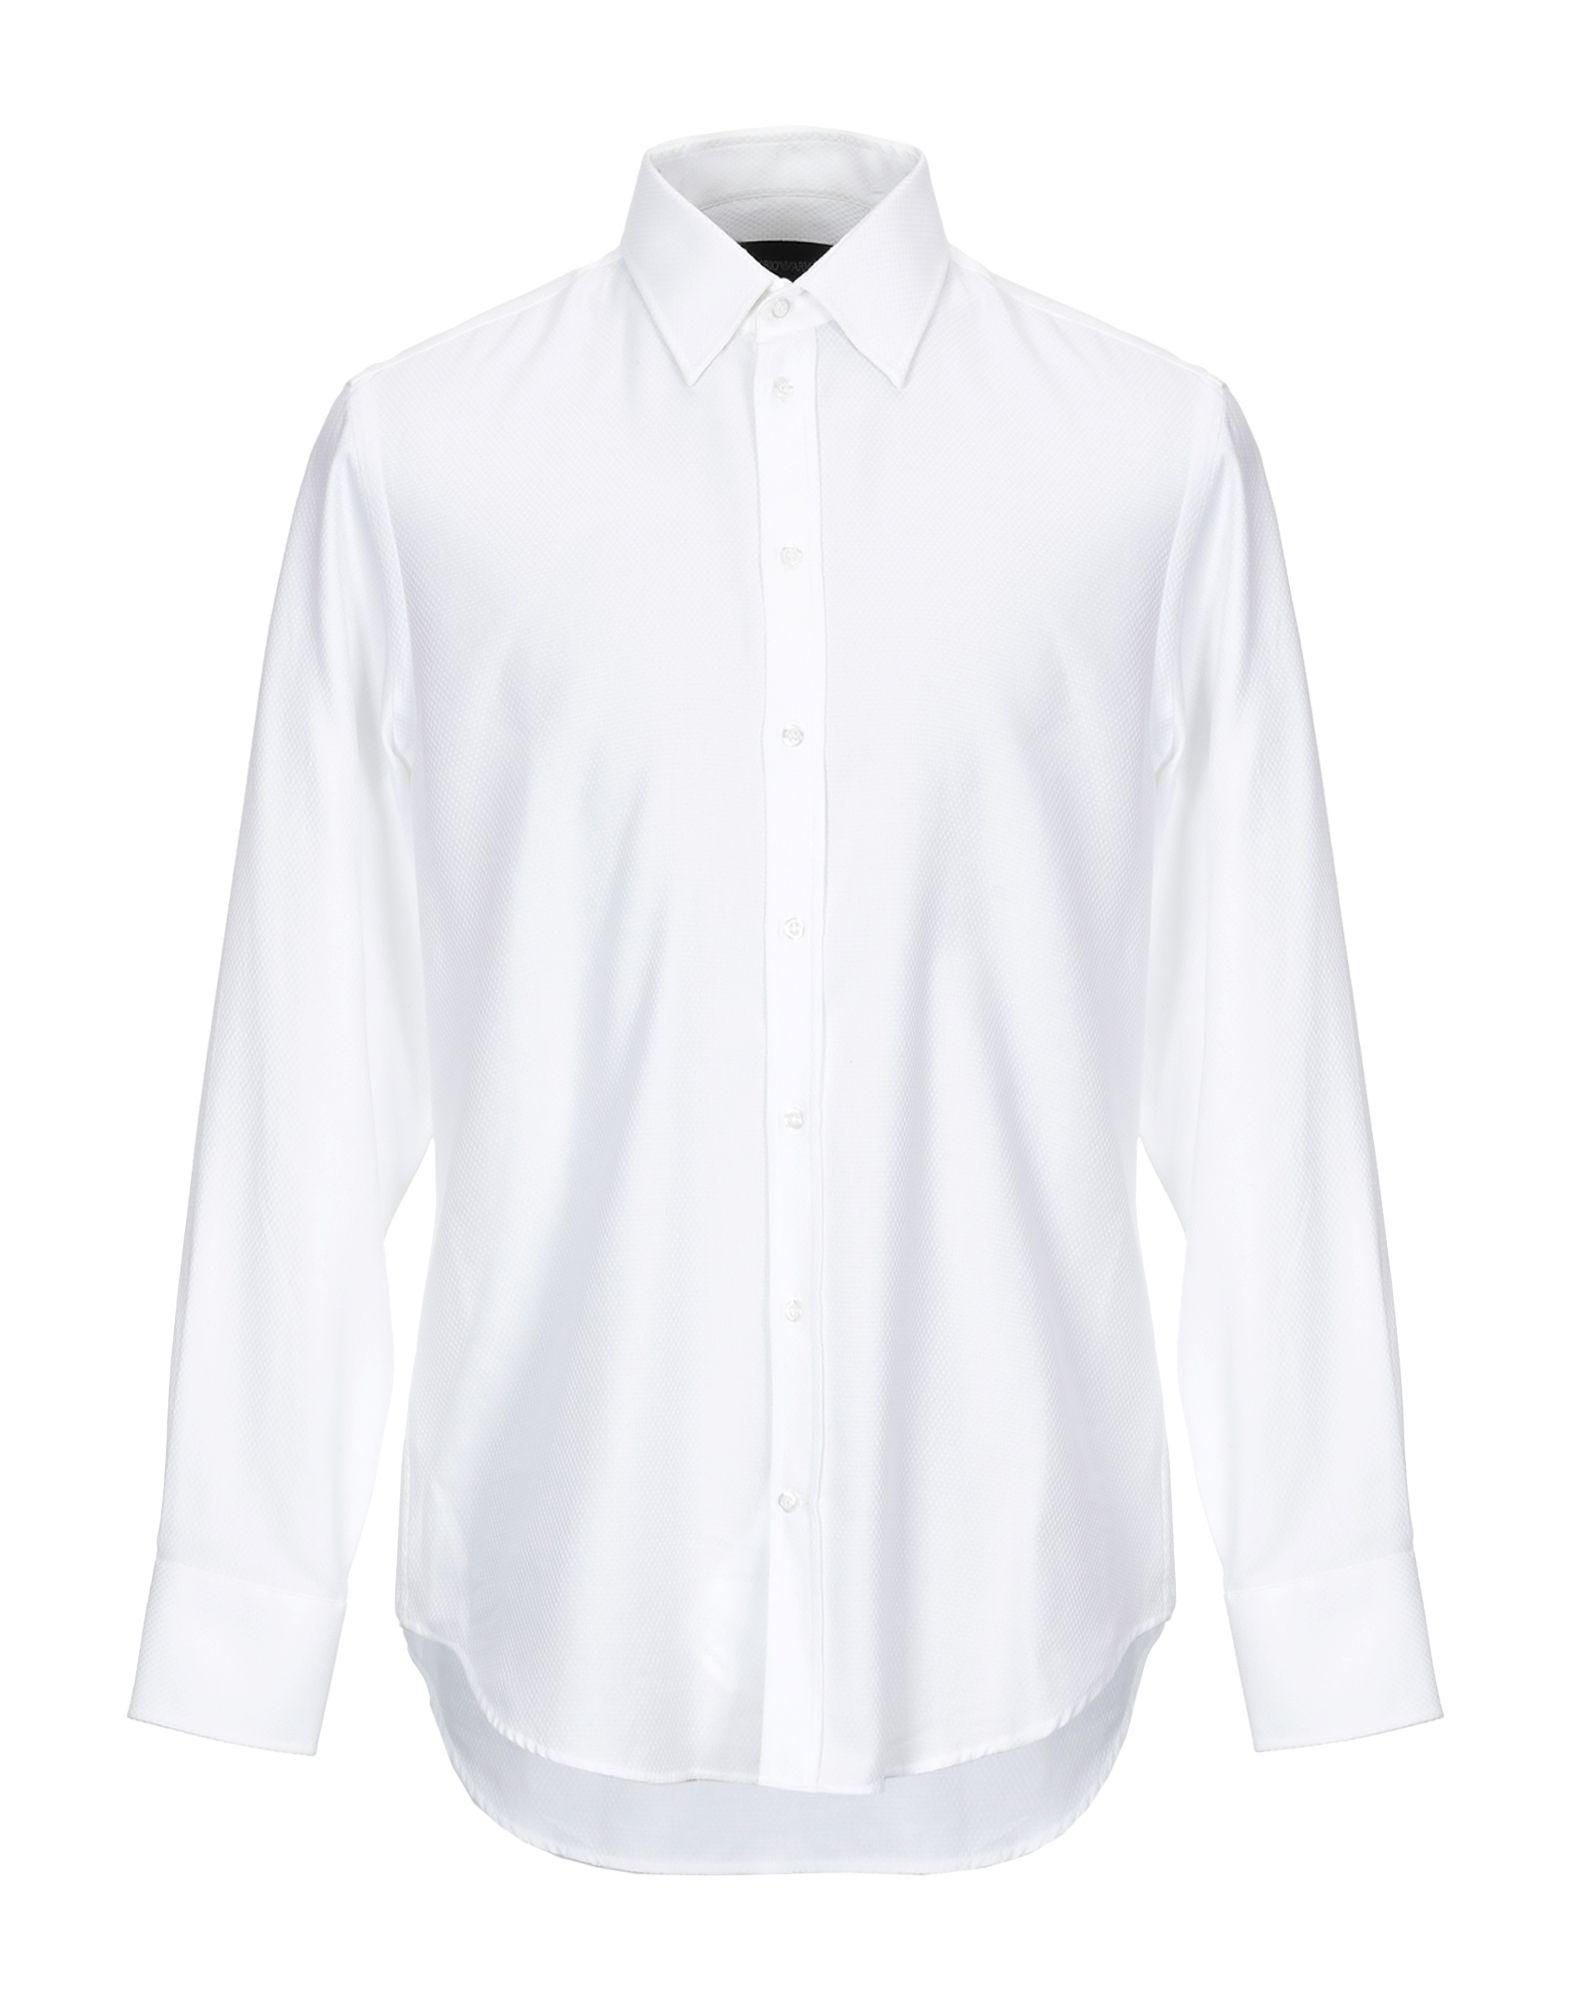 Emporio Armani Shirt in White for Men - Lyst